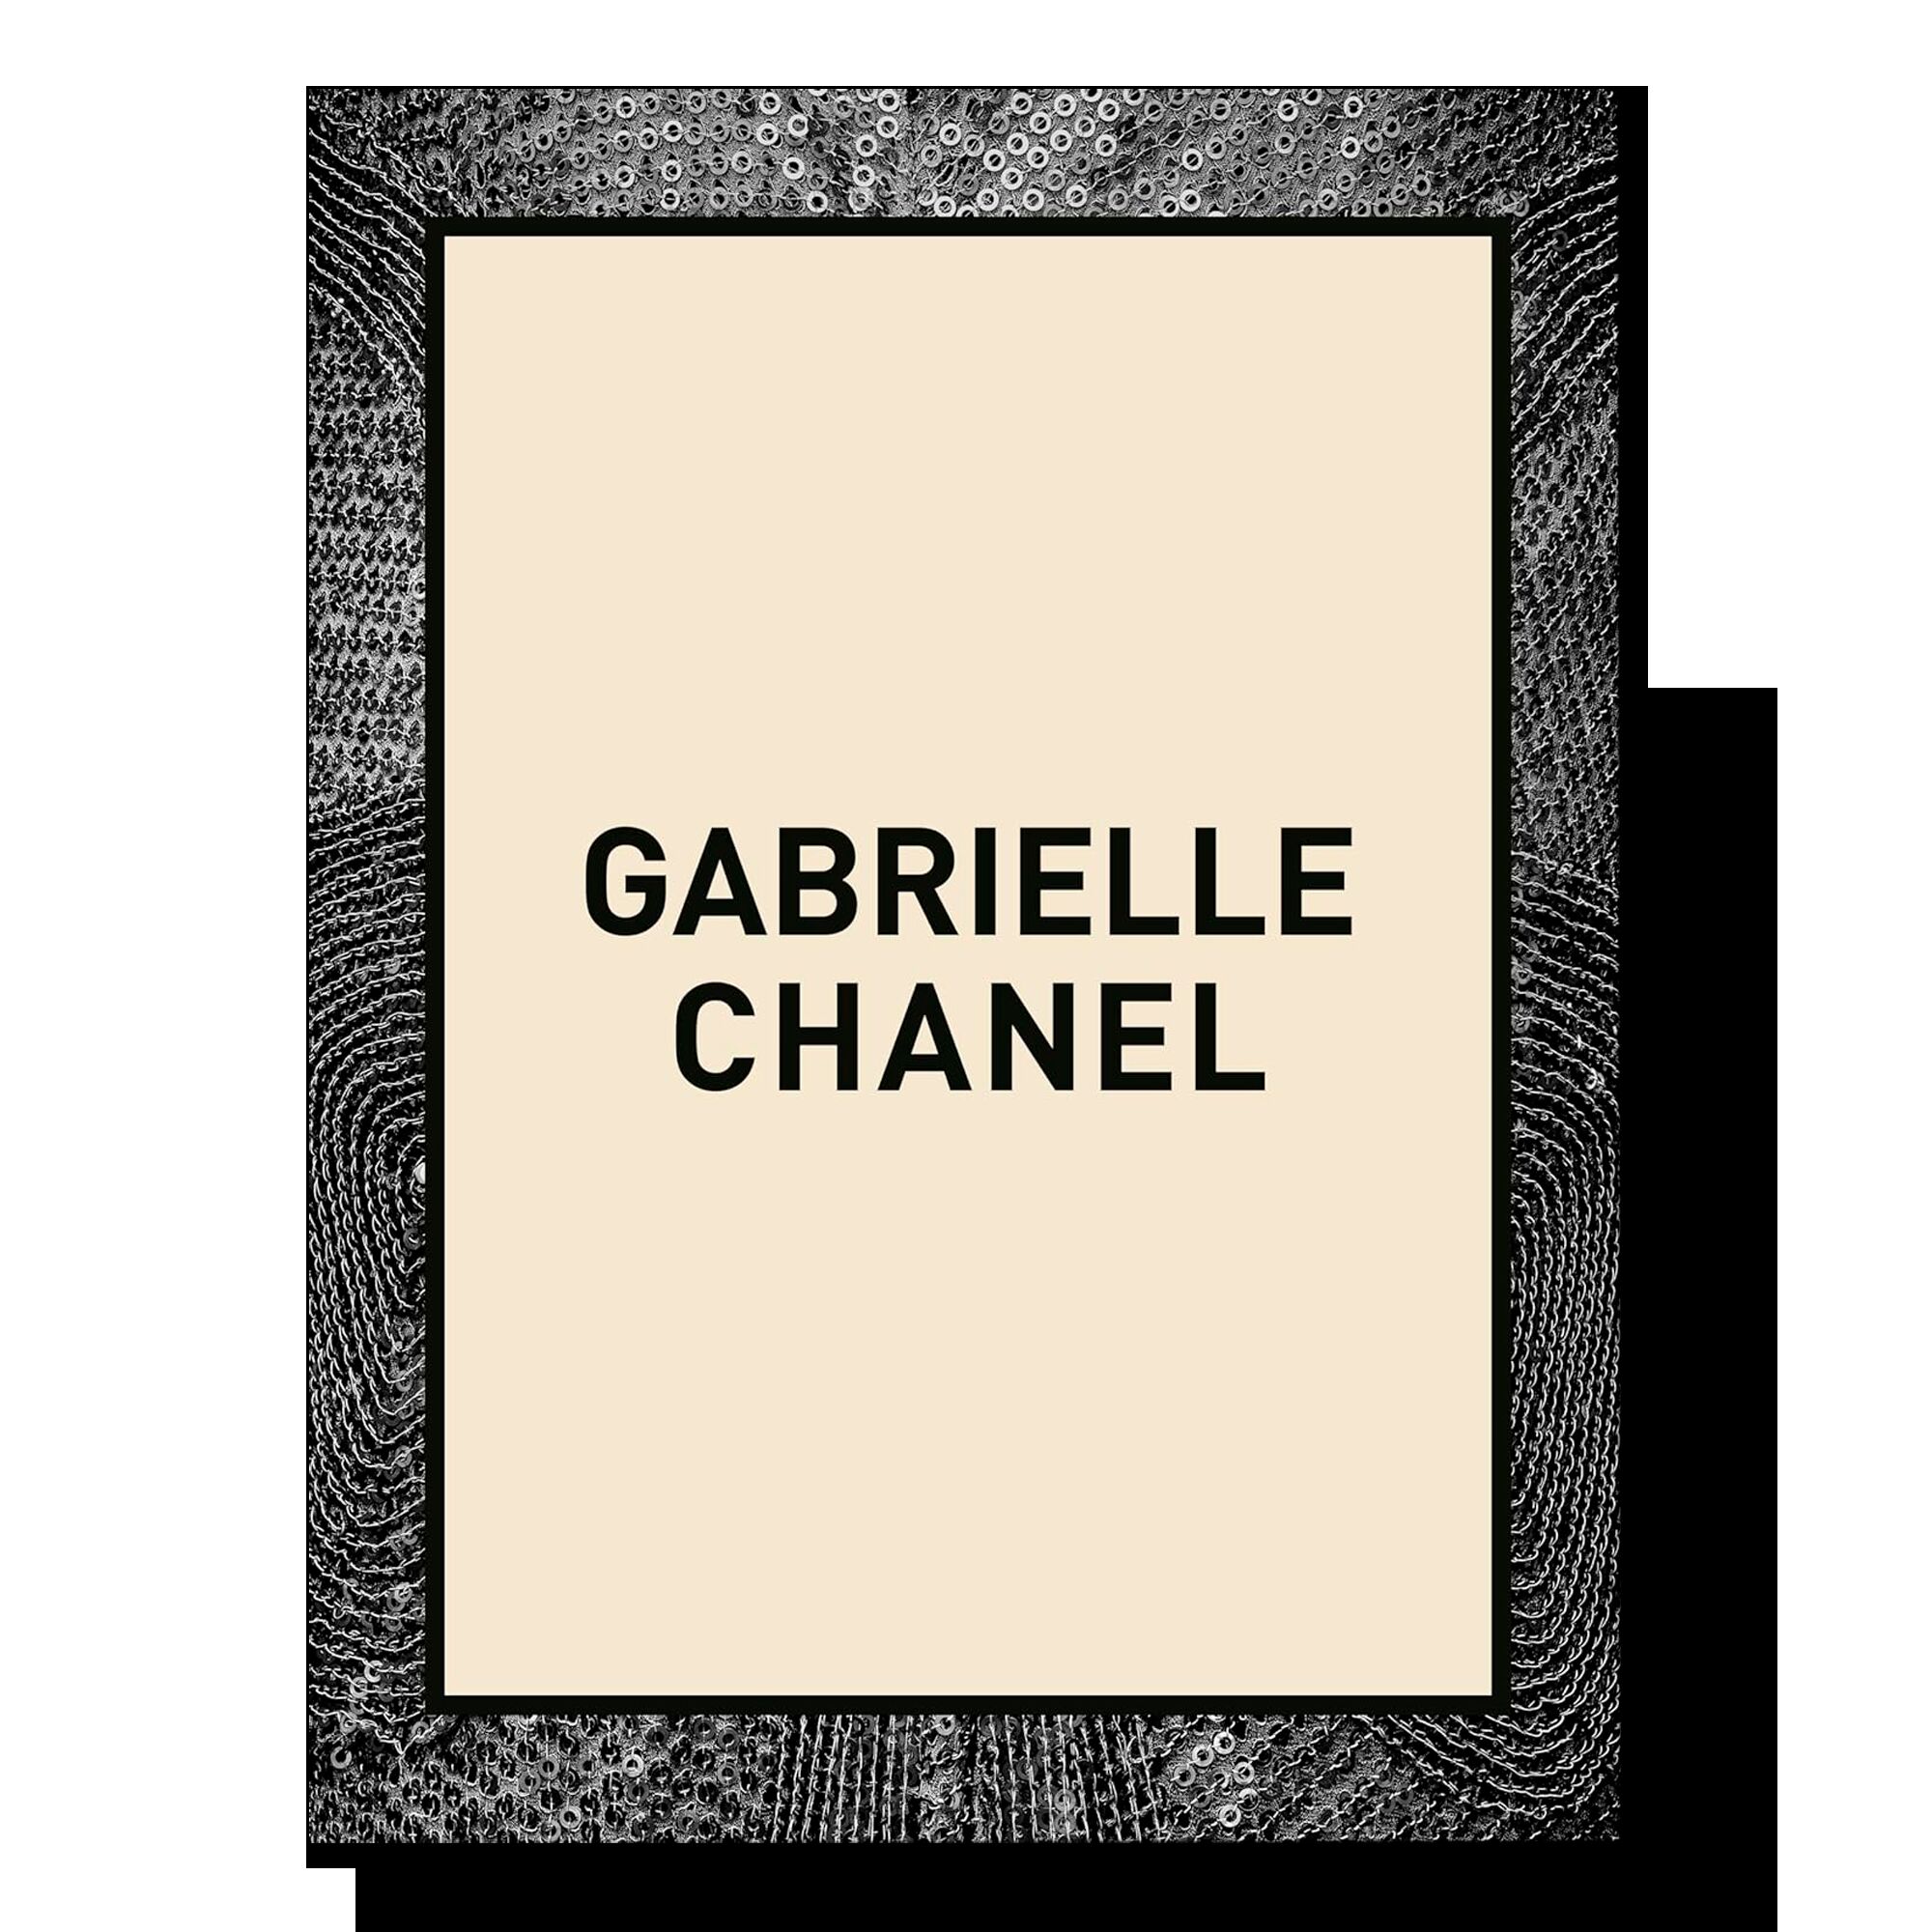 Gabrielle Chanel: 60 Years of Fashion